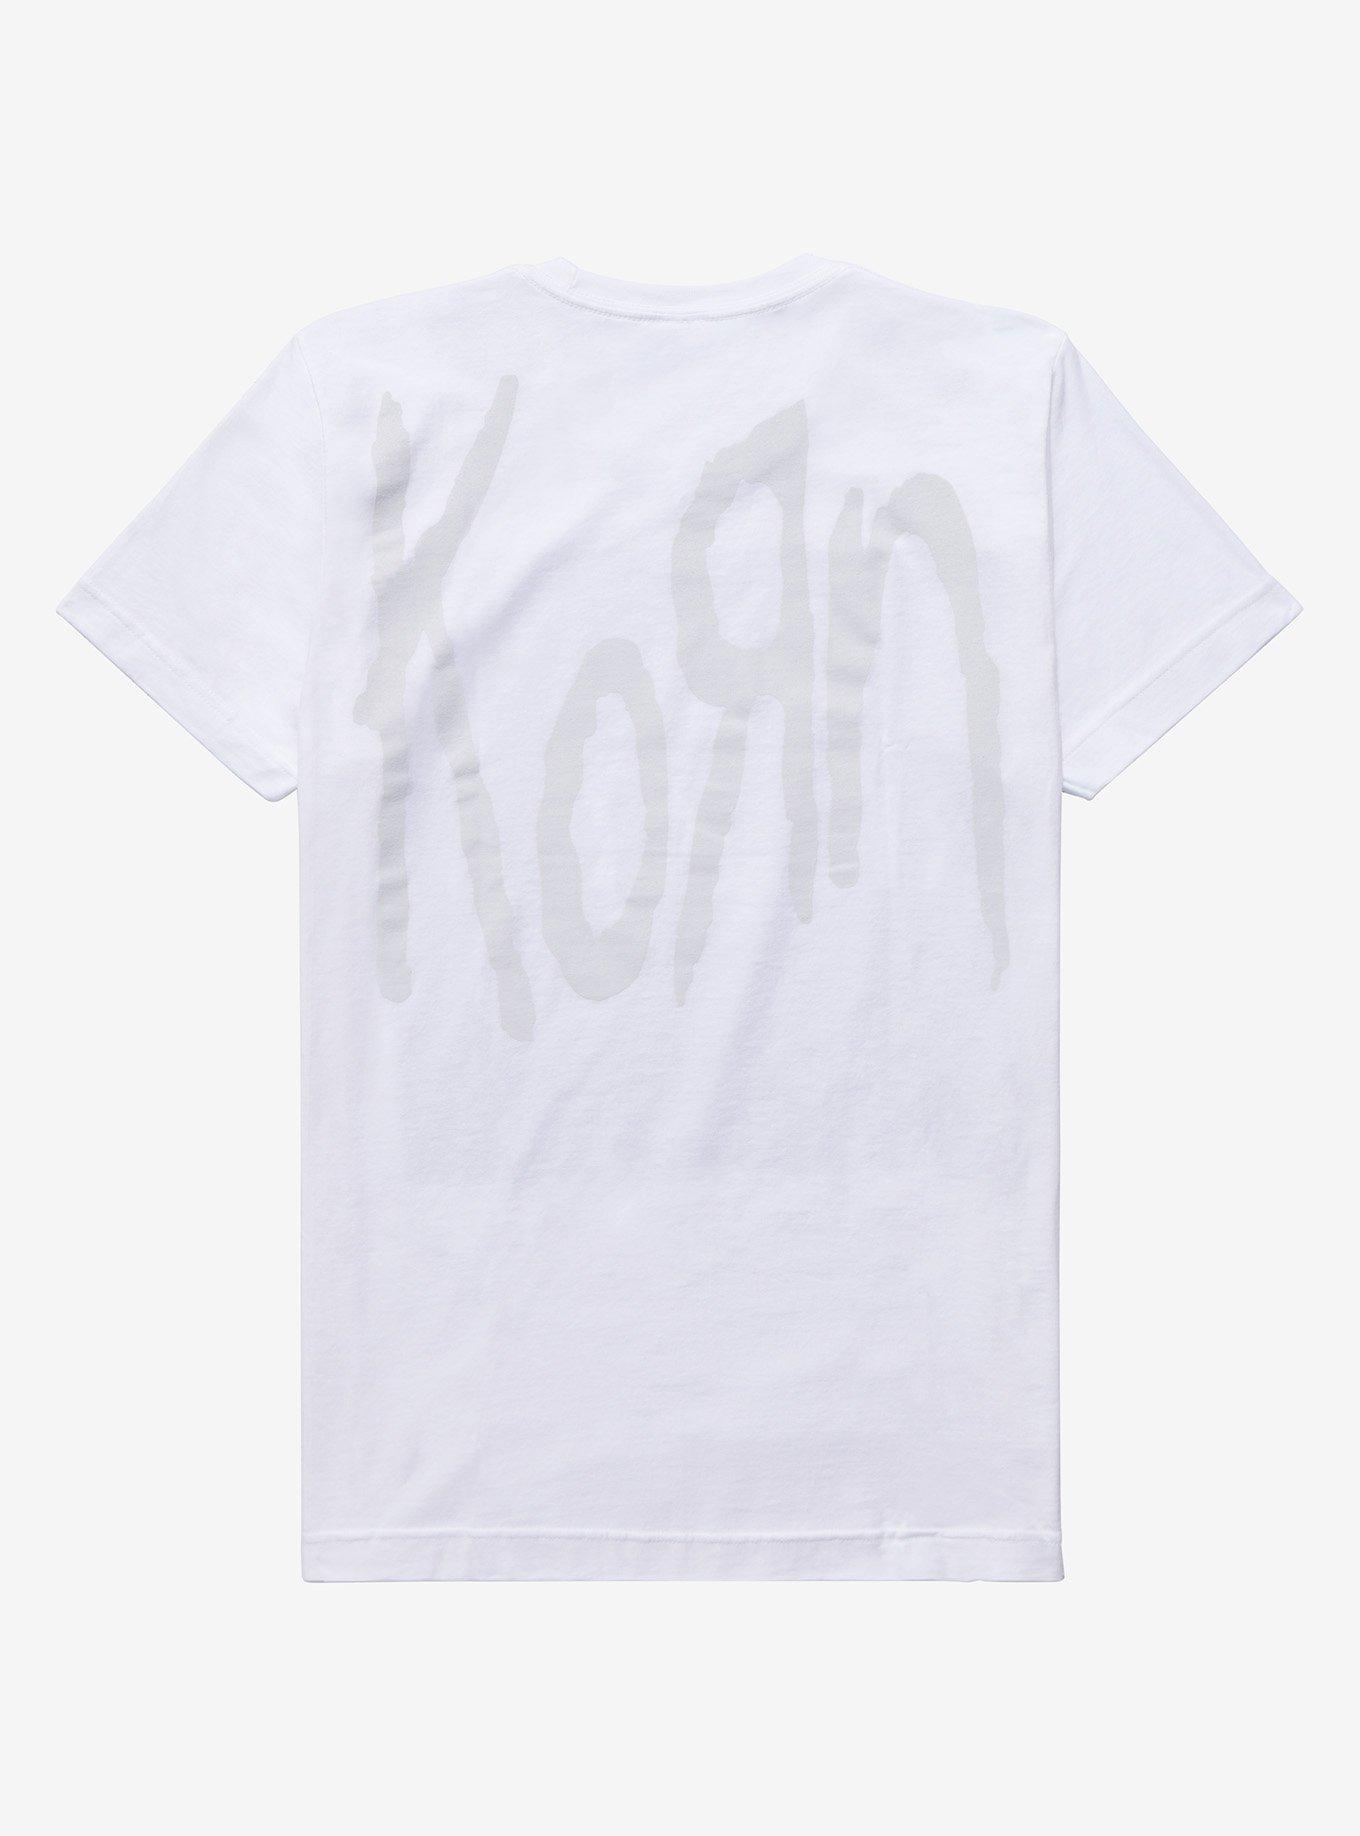 Korn Requiem Album T-Shirt, CHARCOAL, alternate